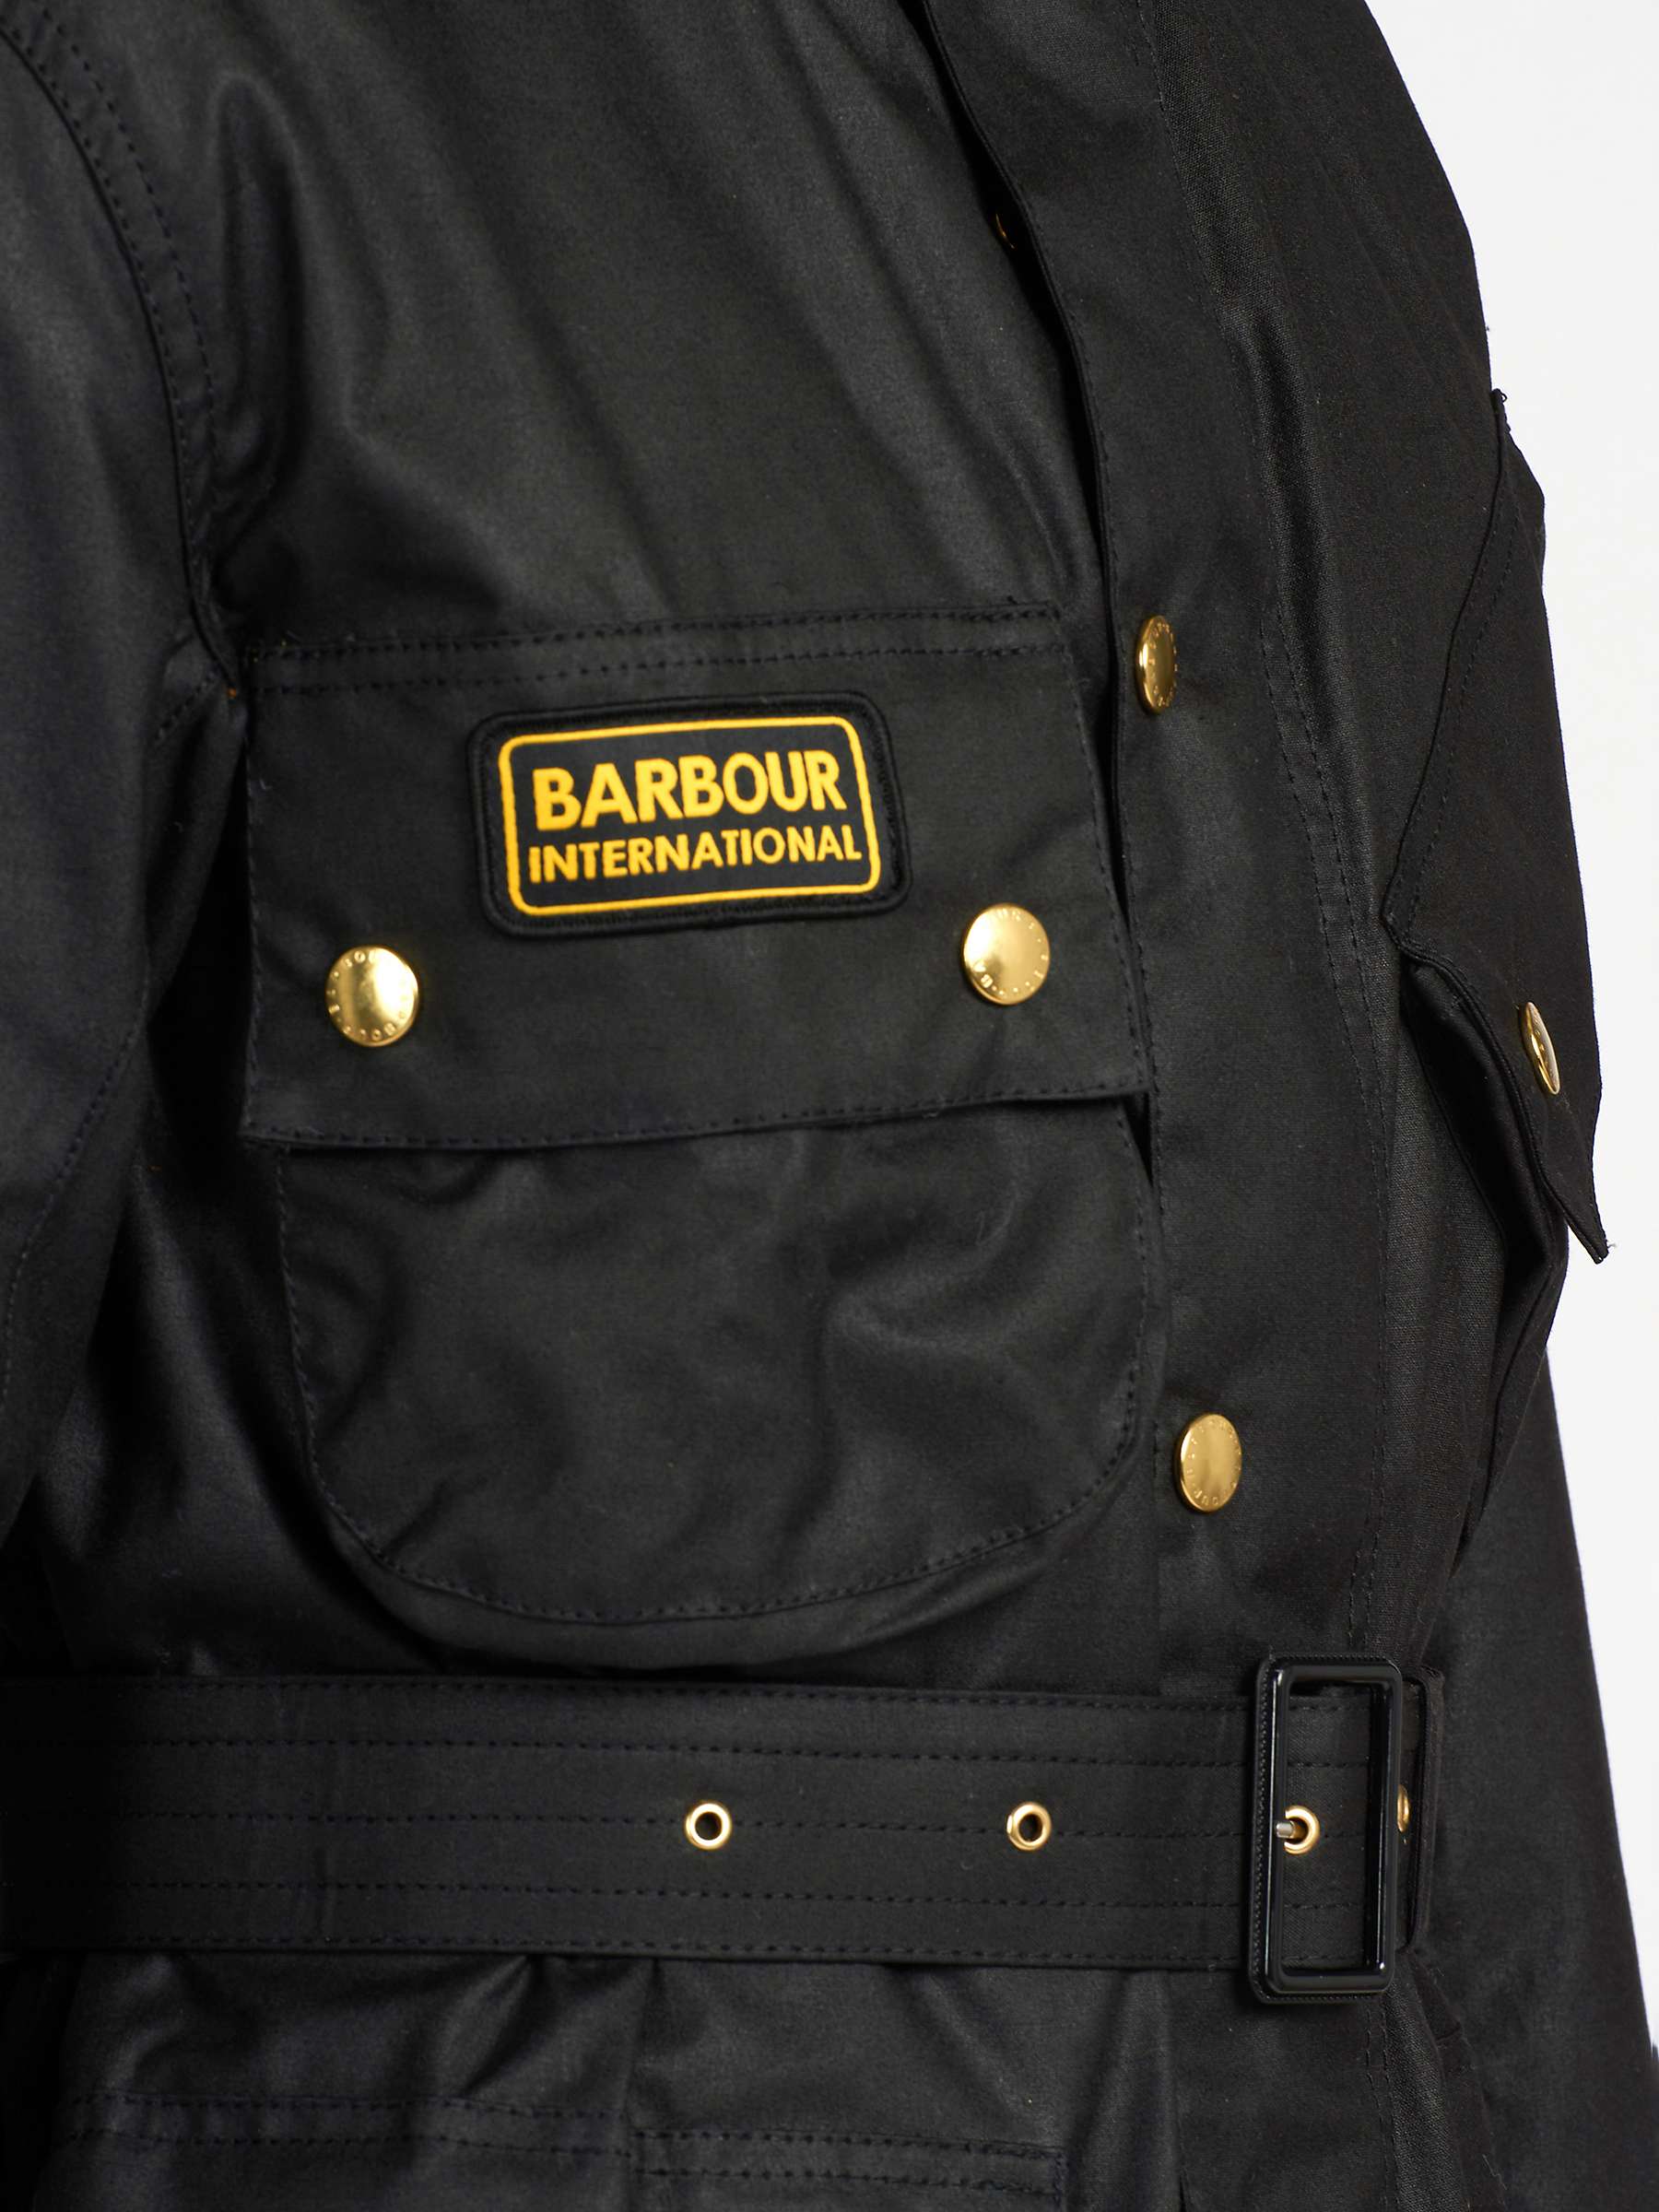 Buy Barbour International Original Waxed Cotton Jacket Online at johnlewis.com